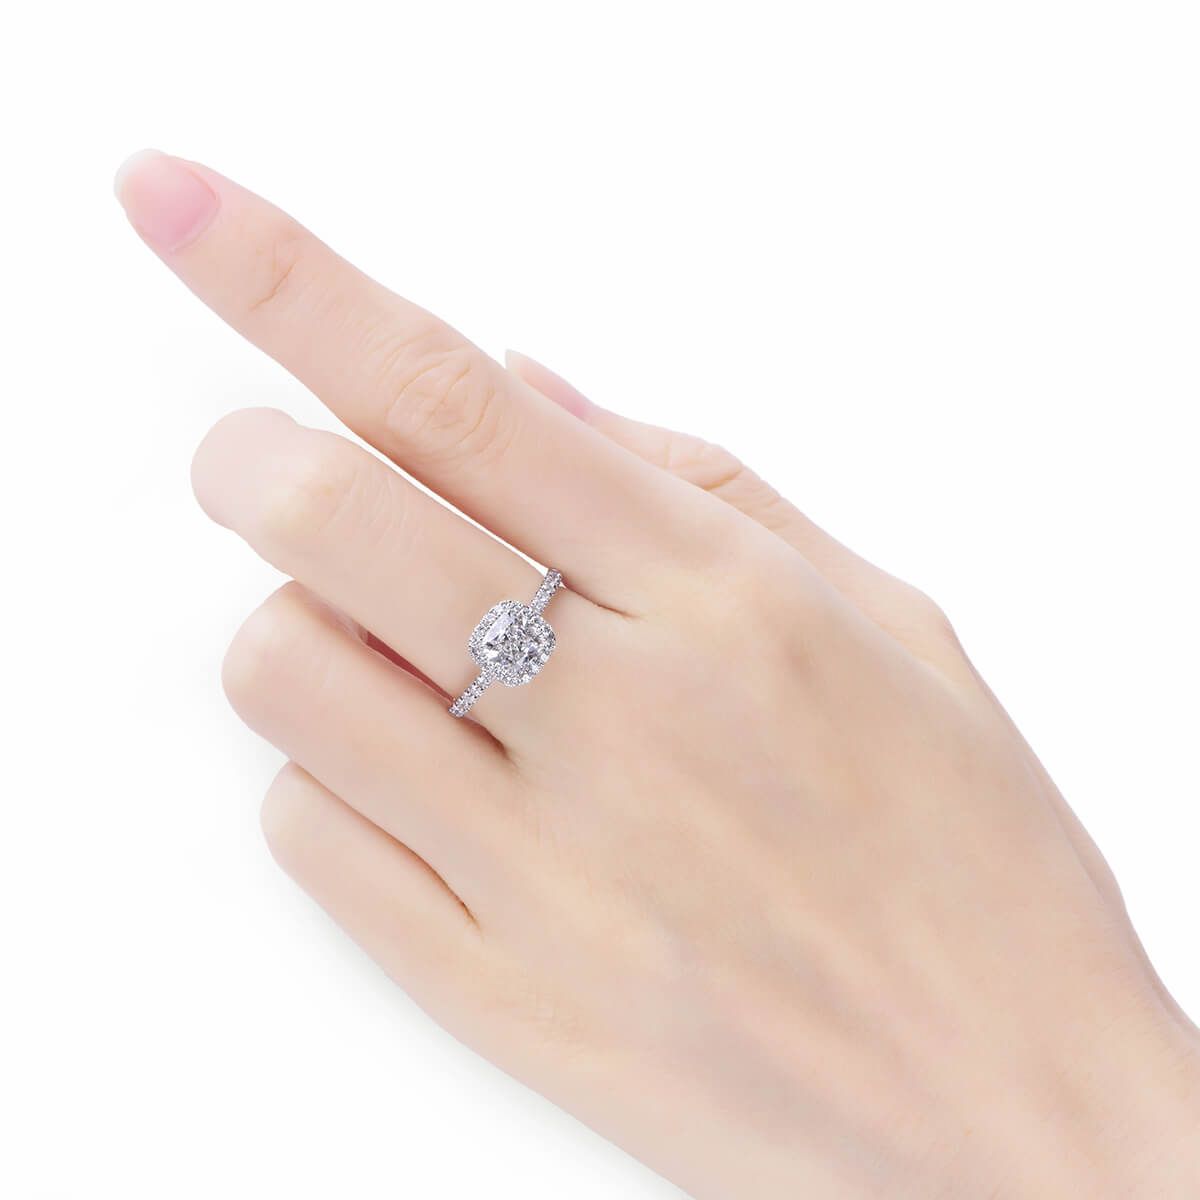  White Diamond Ring, 1.14 Ct. (1.49 Ct. TW), Cushion shape, GIA Certified, 7242352584